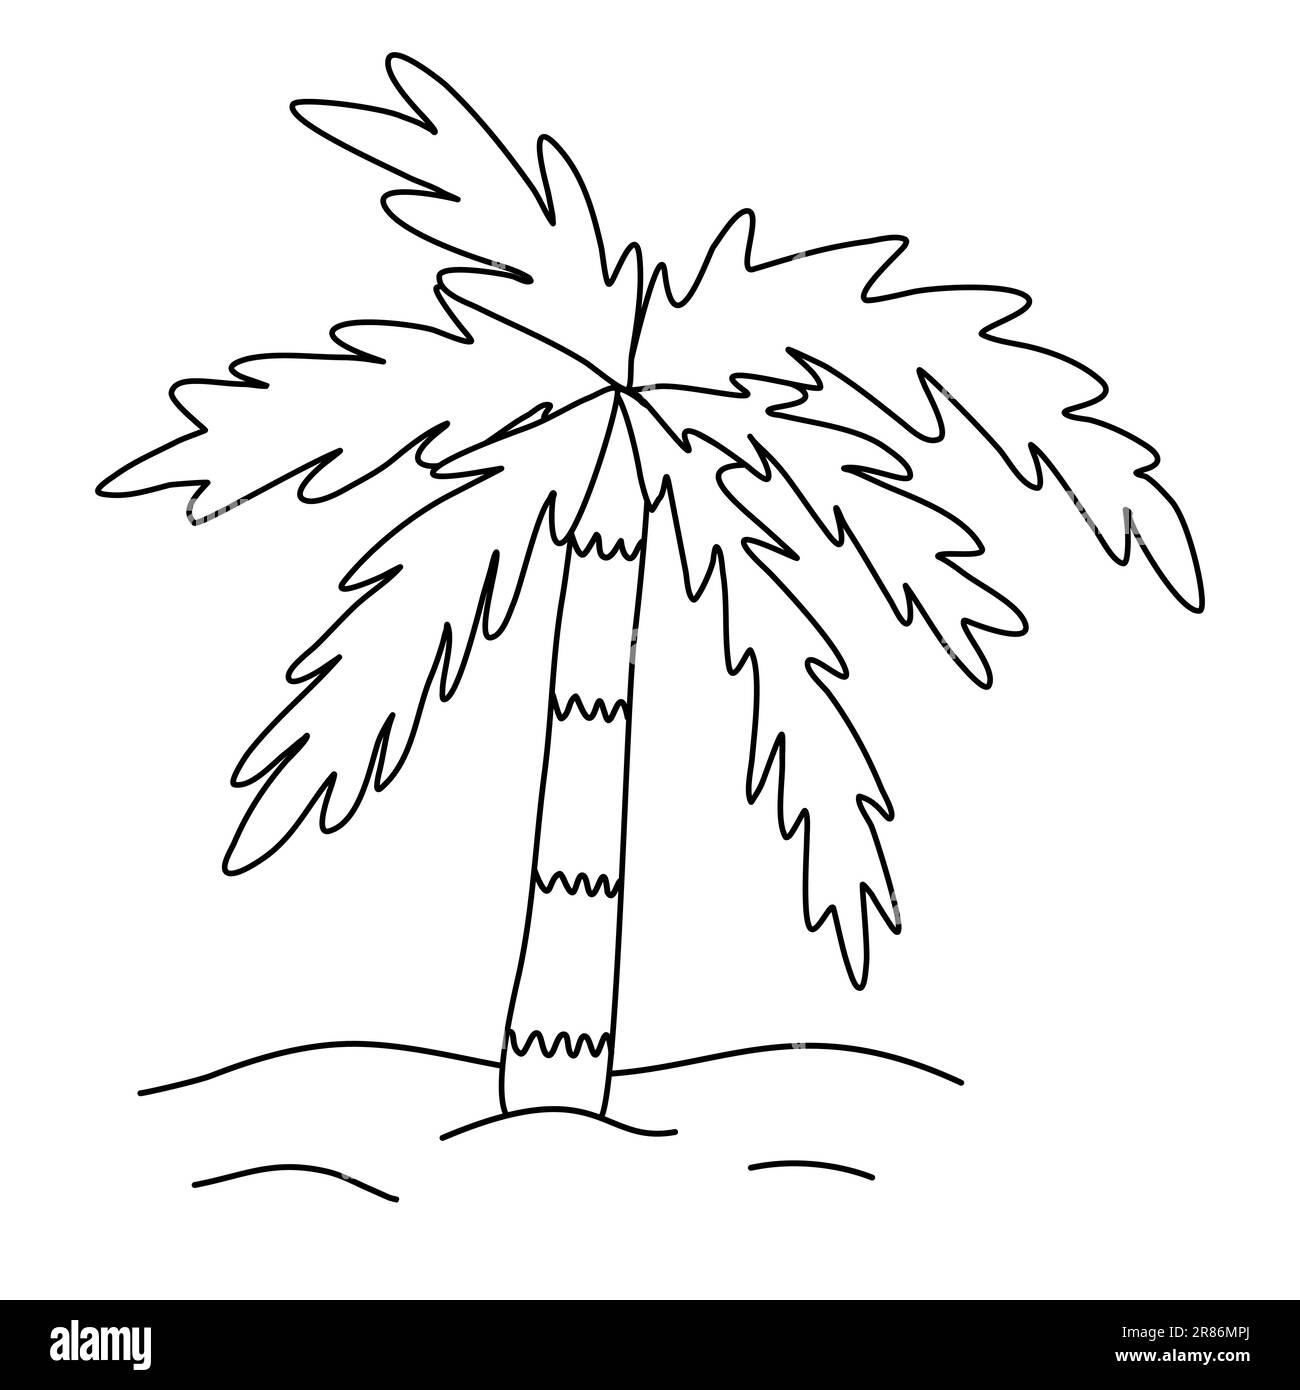 Hand Drawn Coconut Tree Sketch Stock Illustration 1681362547 | Shutterstock